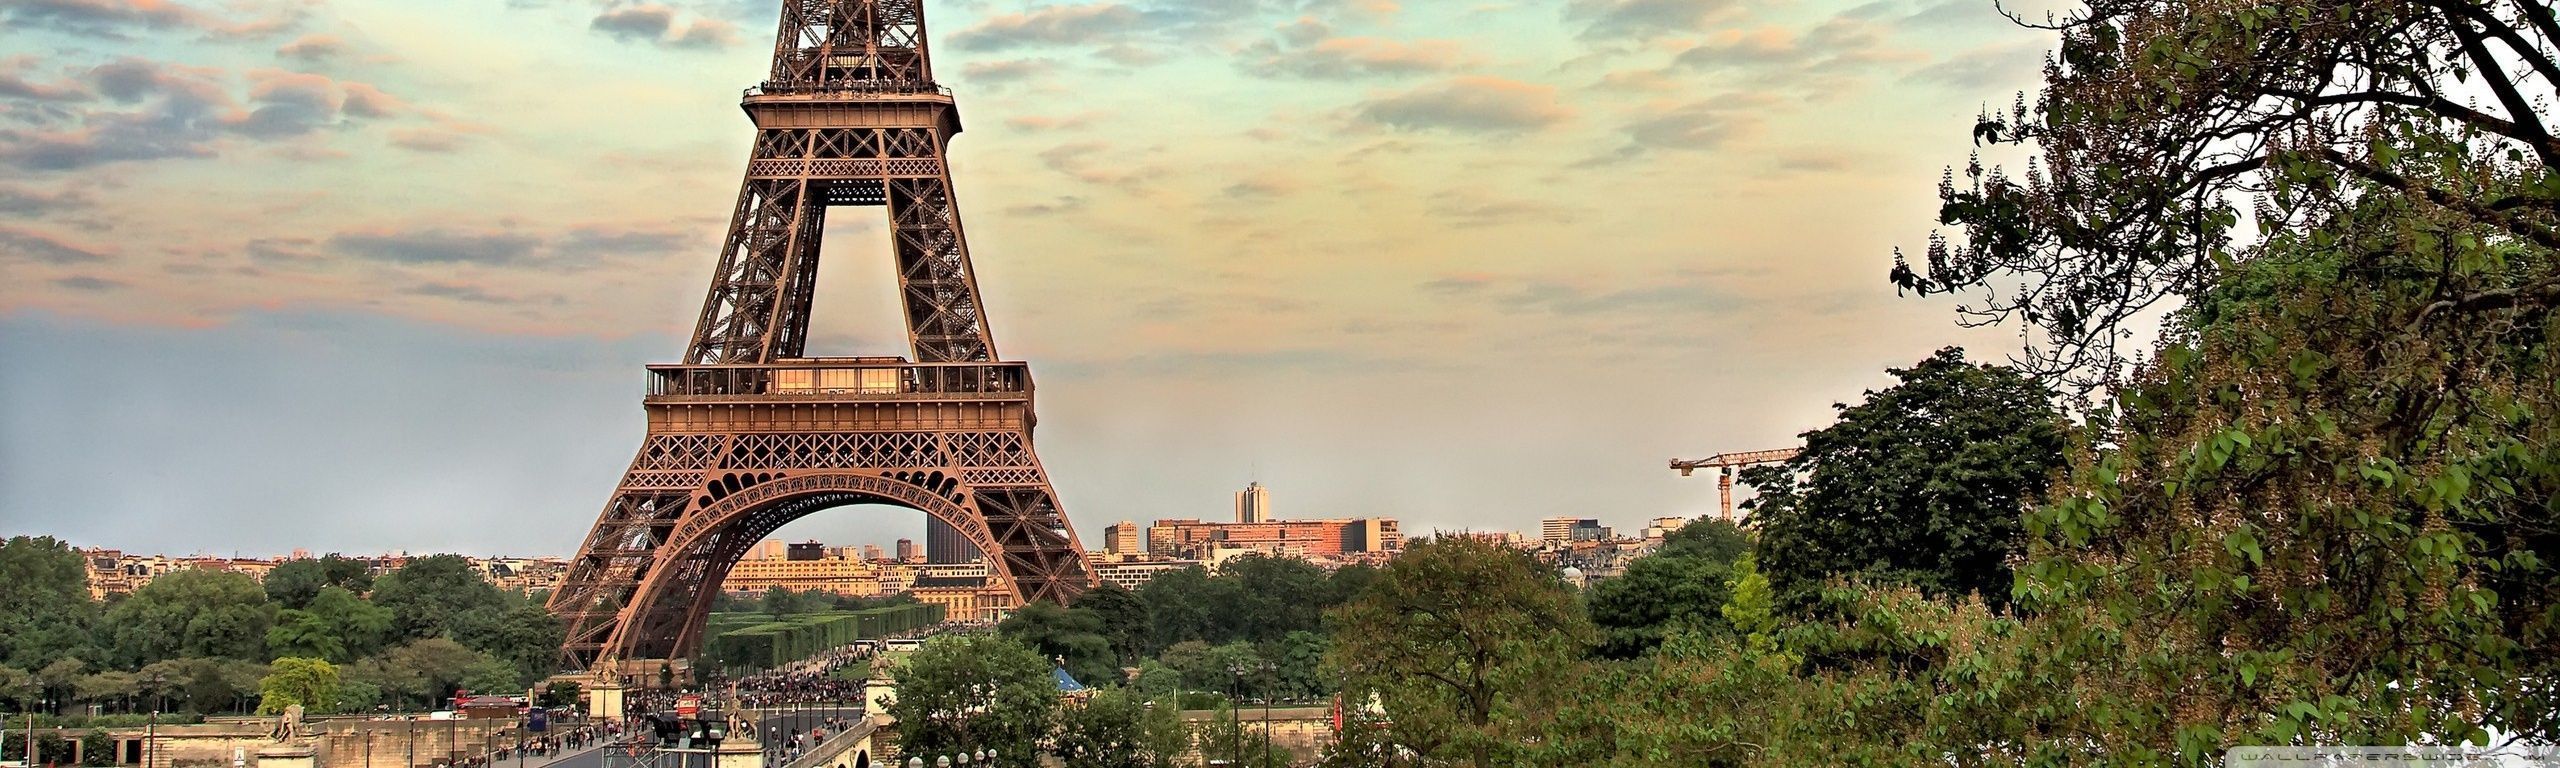 Eiffel Tower, Paris, France Ultra HD Desktop Background Wallpaper for 4K UHD TV : Multi Display, Dual Monitor